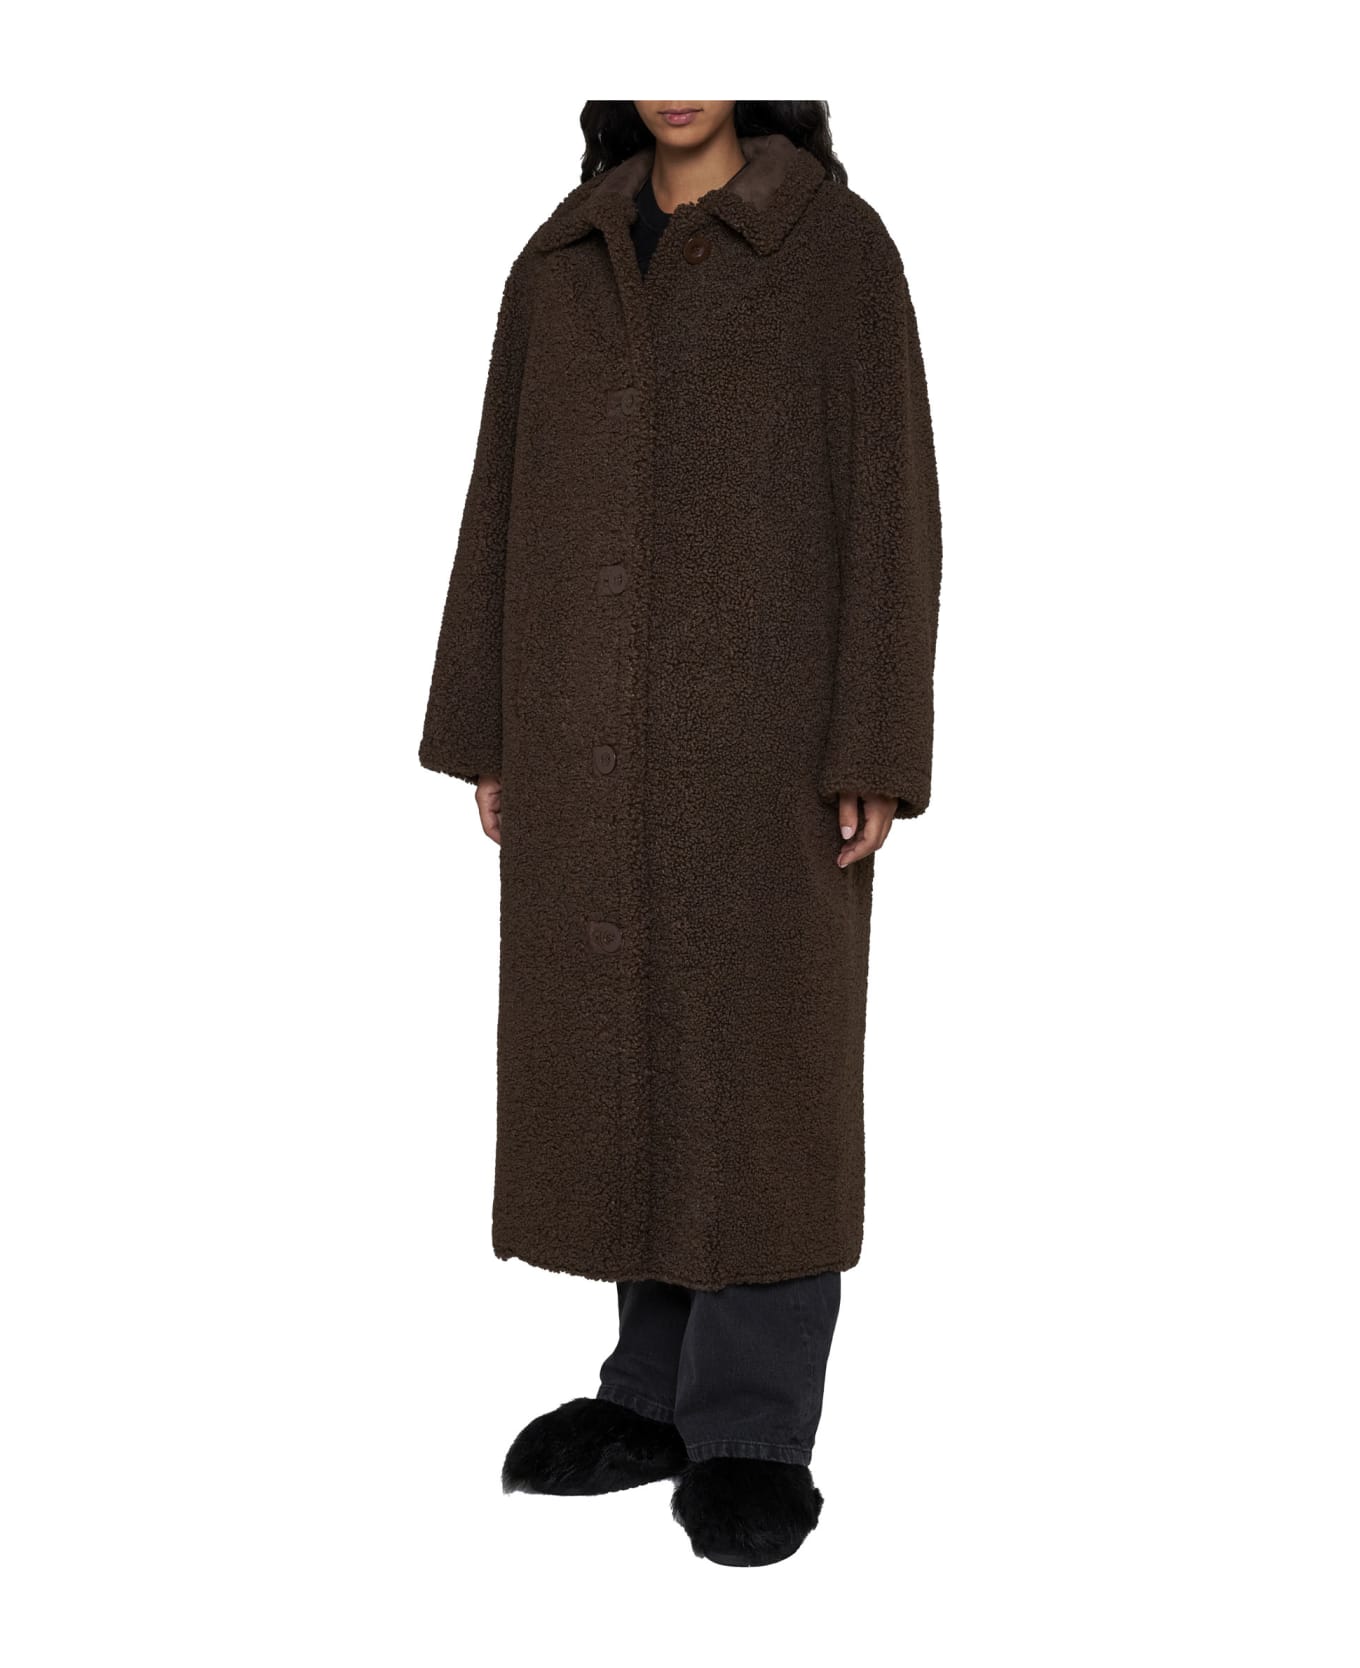 STAND STUDIO Coat - Ebony brown/ebony brown コート